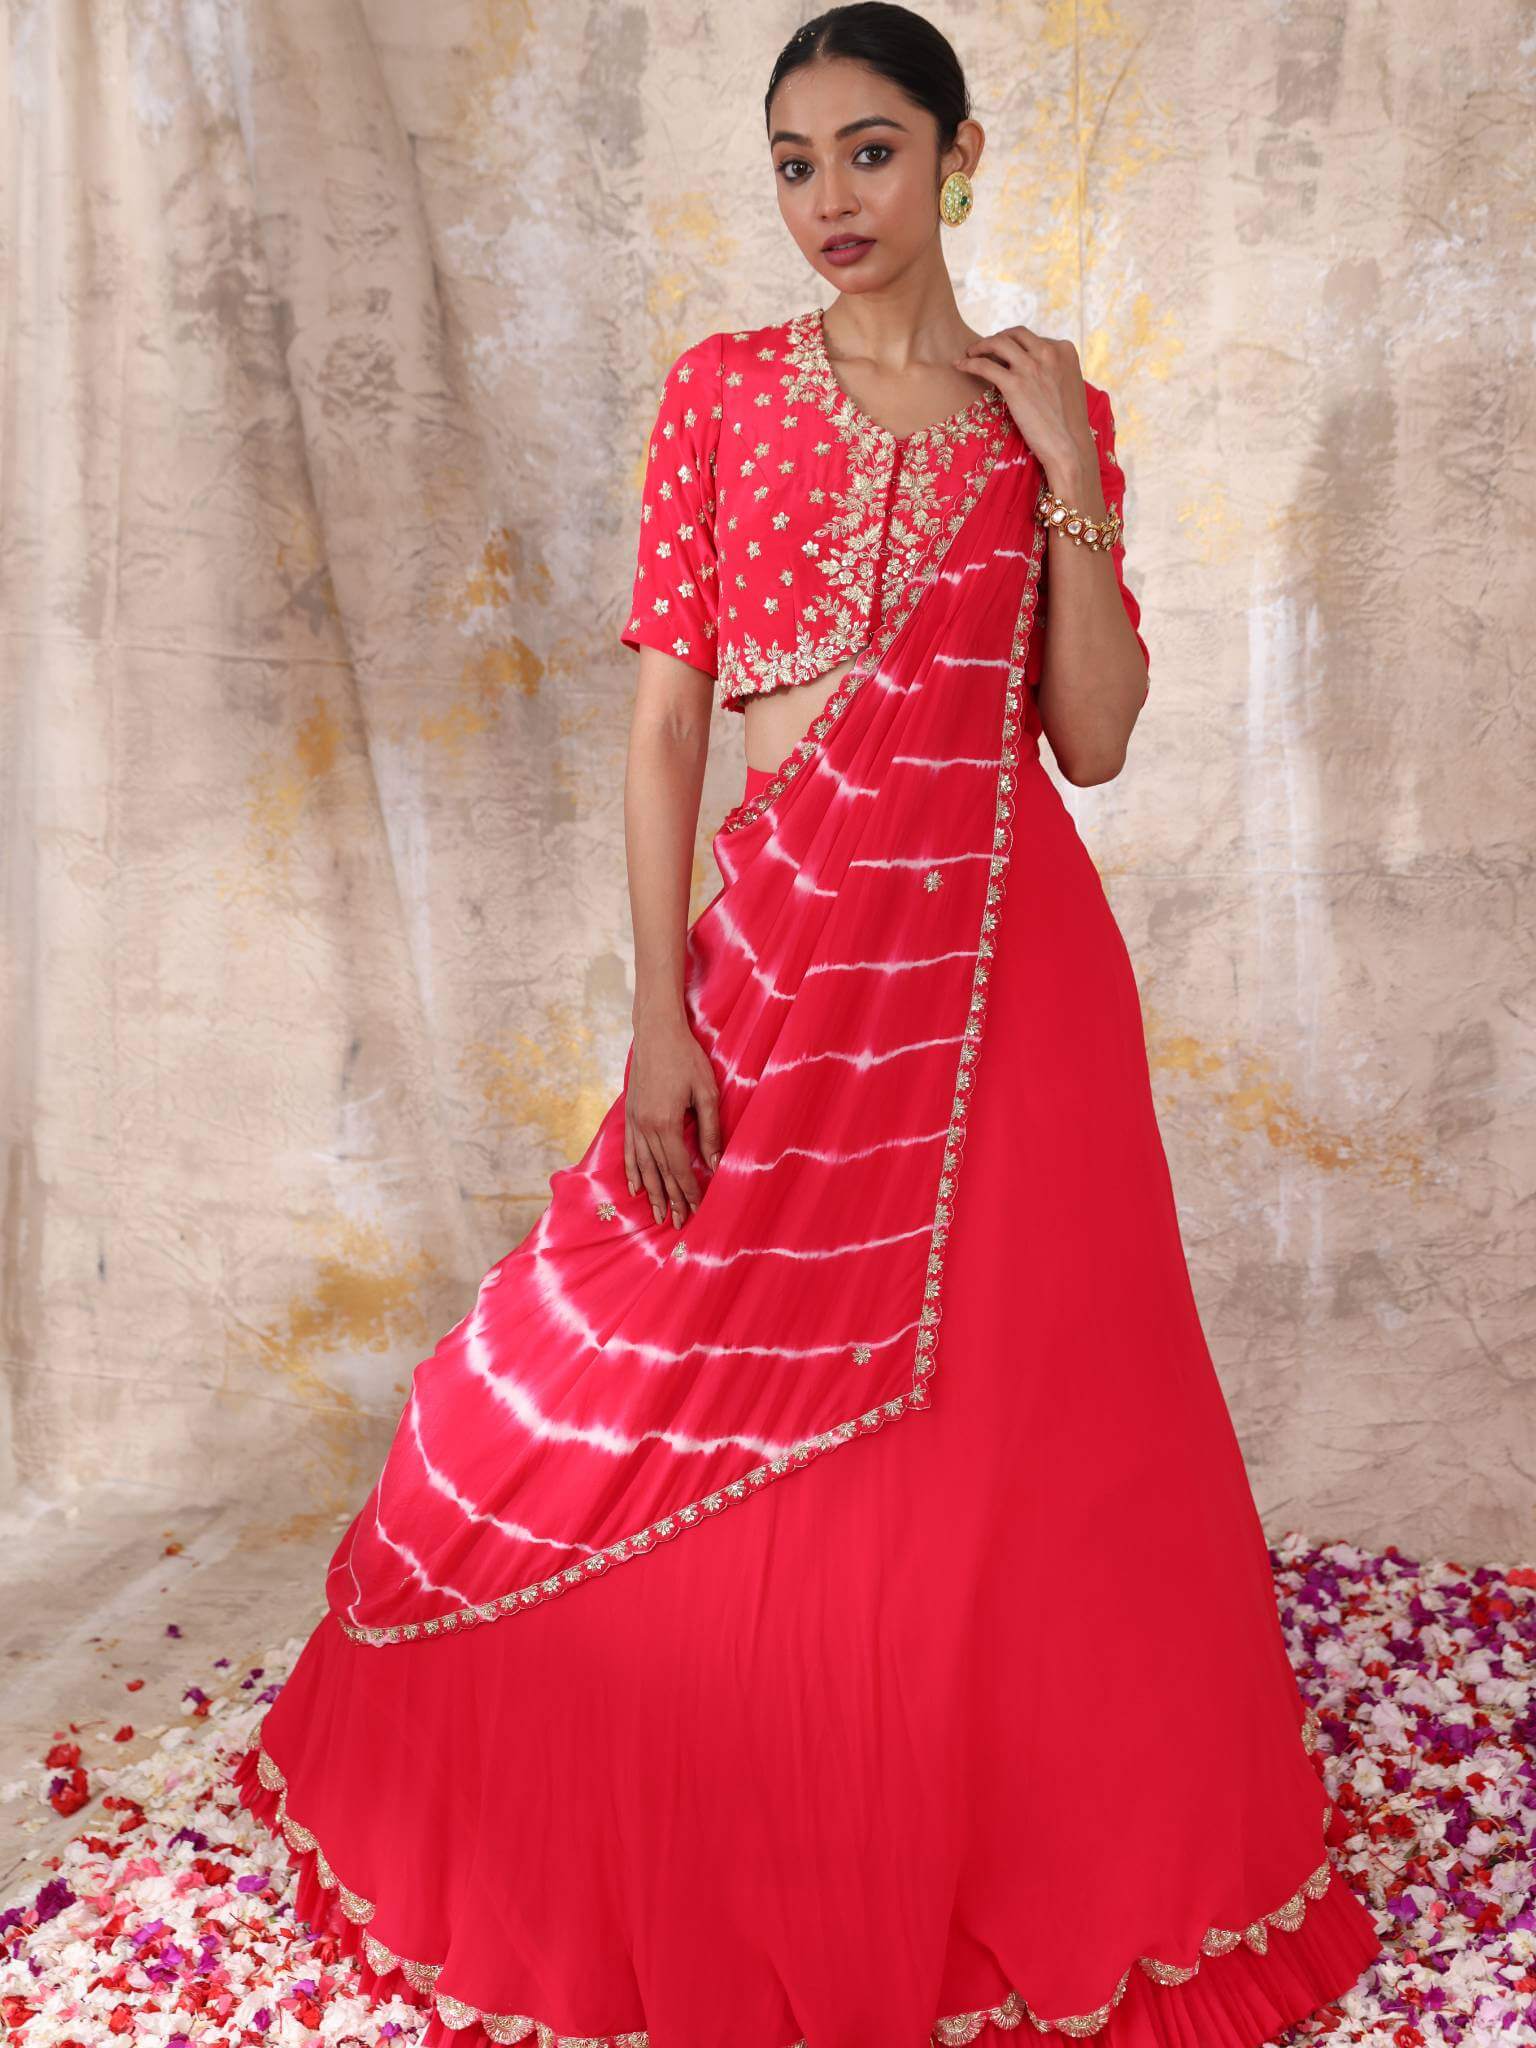 Red Lehenga Online Shopping: Buy Red Color Bridal Lehengas